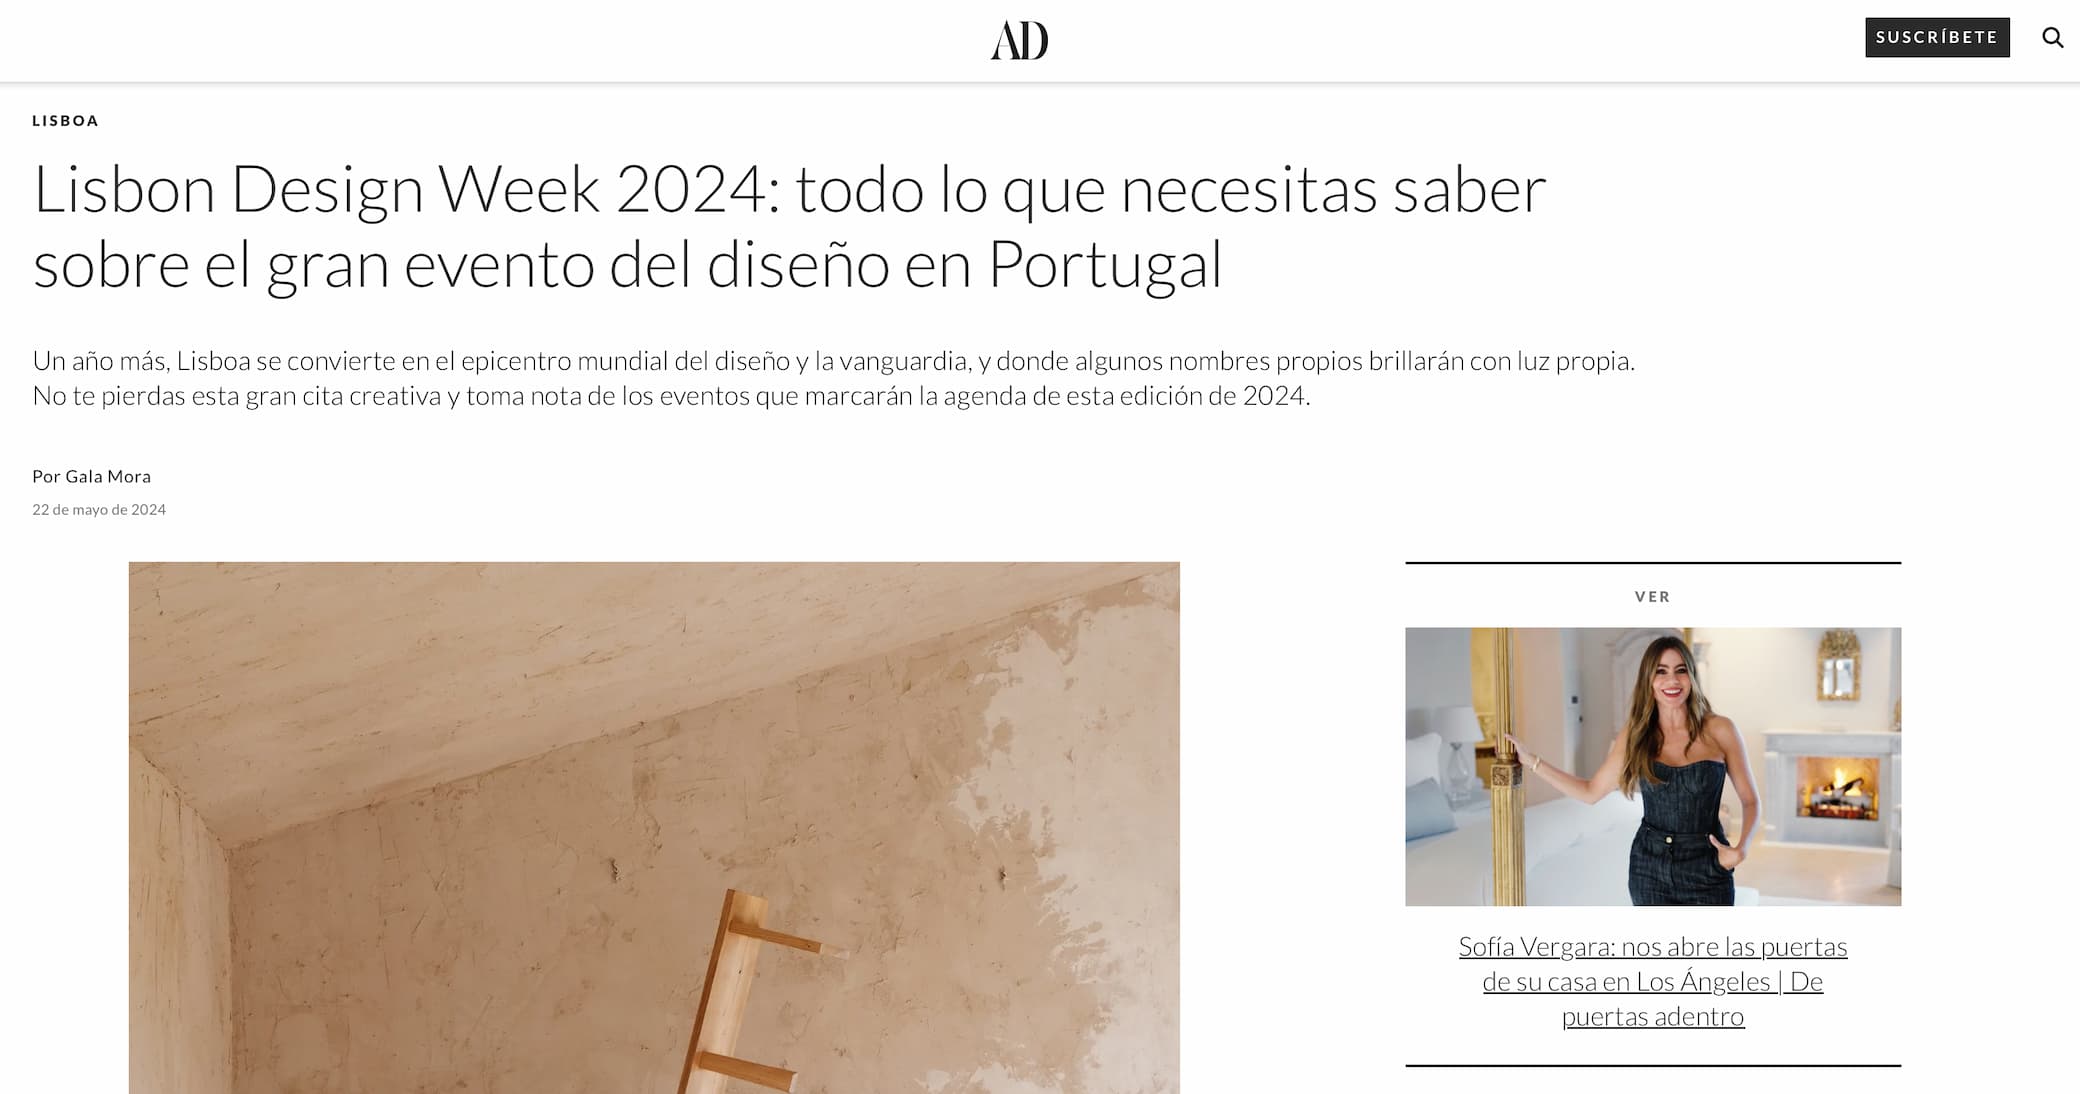 ojo-gallery-ad-magazine-spain-lisbon-design-week-2024-article